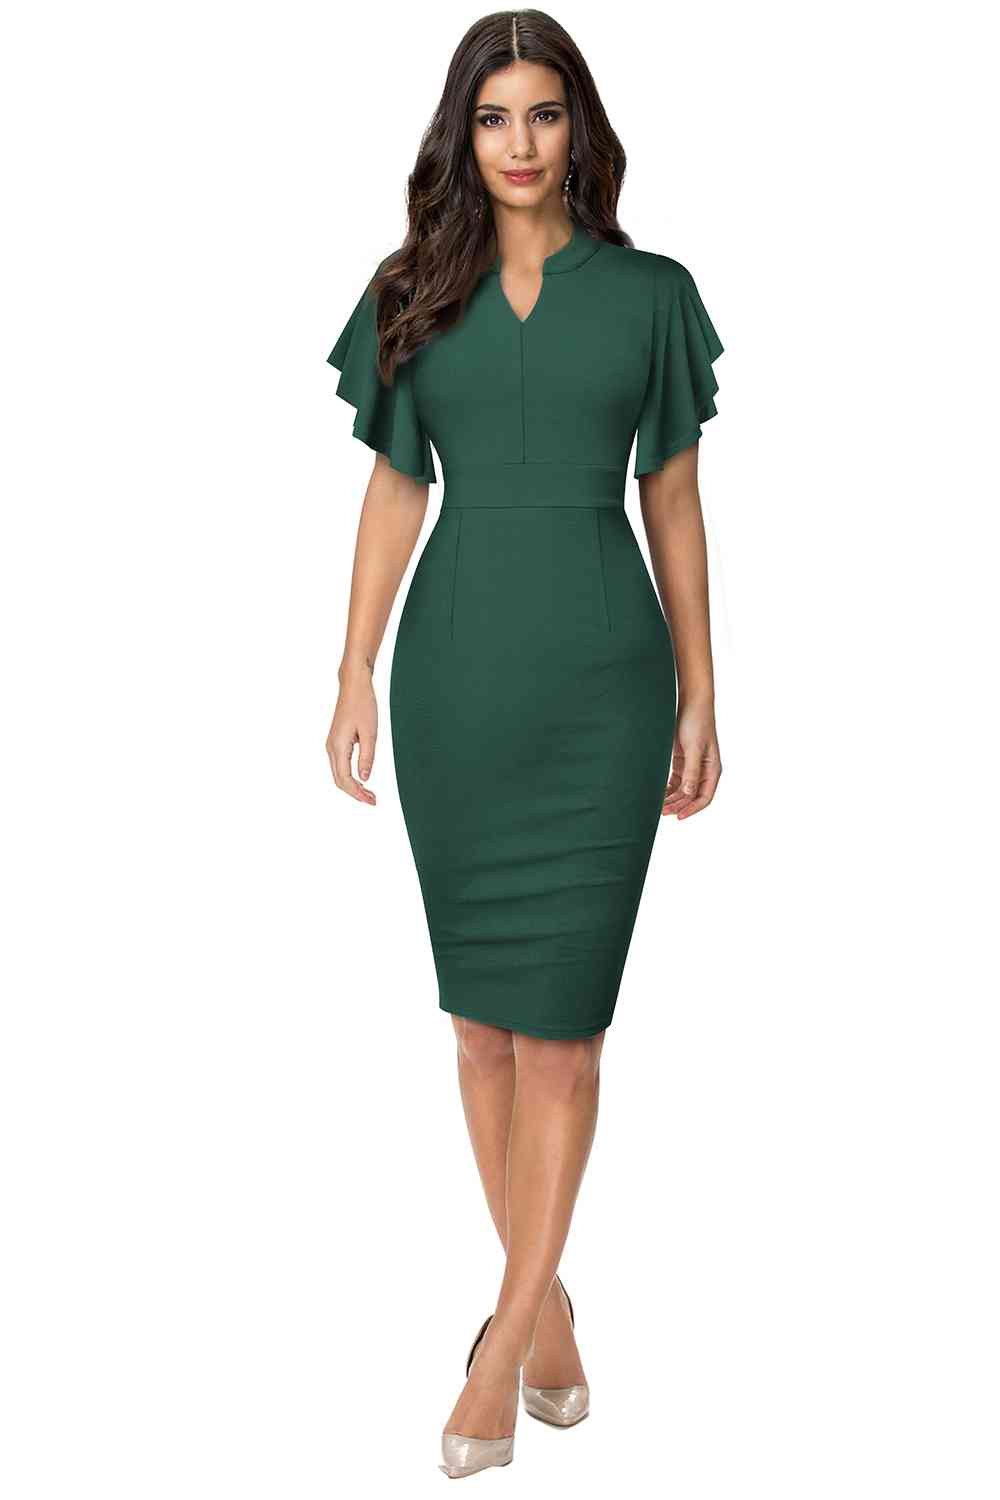 Notched Neck Flutter Sleeve Pencil Dress - Green / S - All Dresses - Dresses - 13 - 2024